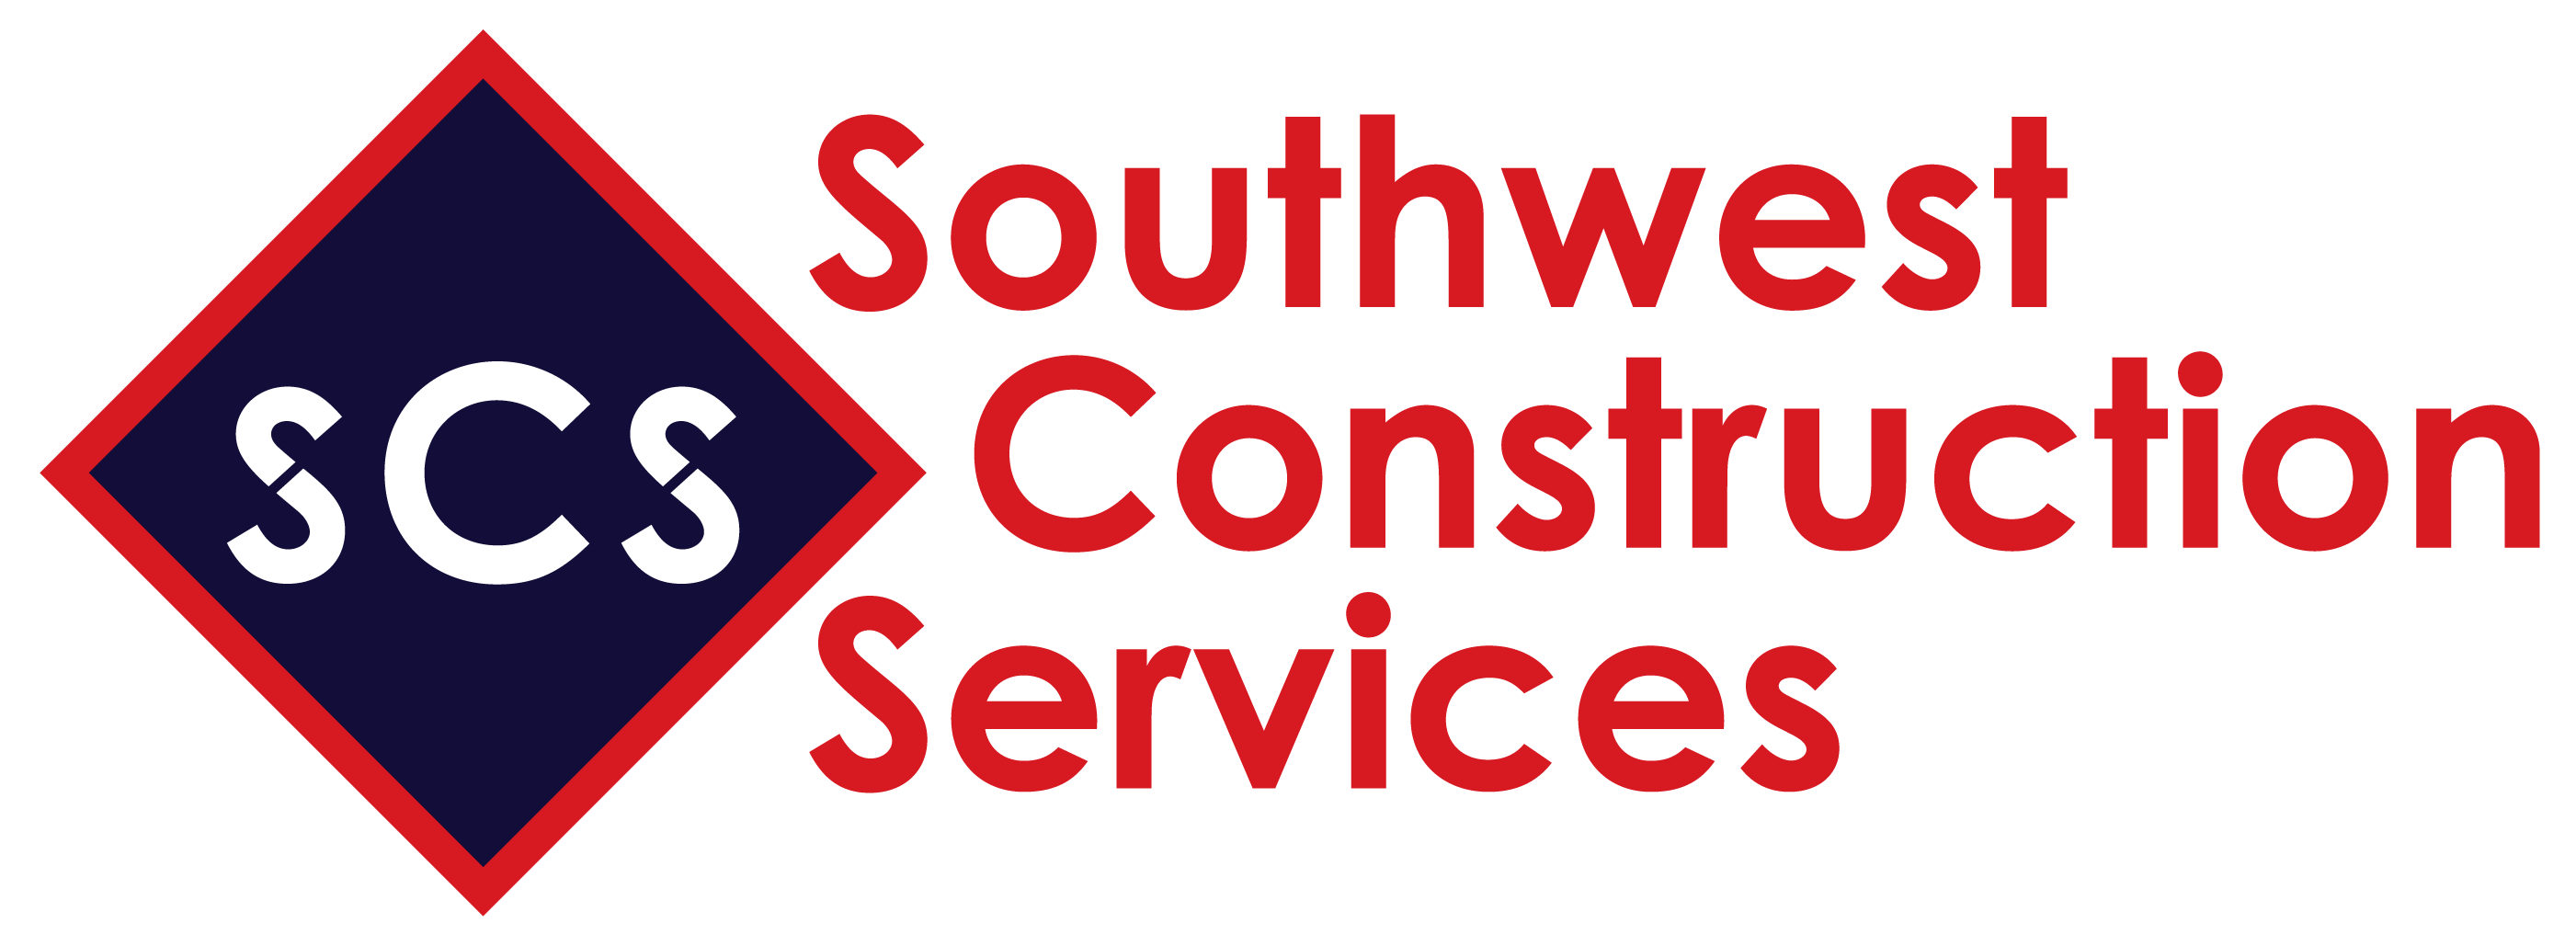 Southwest Construction Services 30 year logo